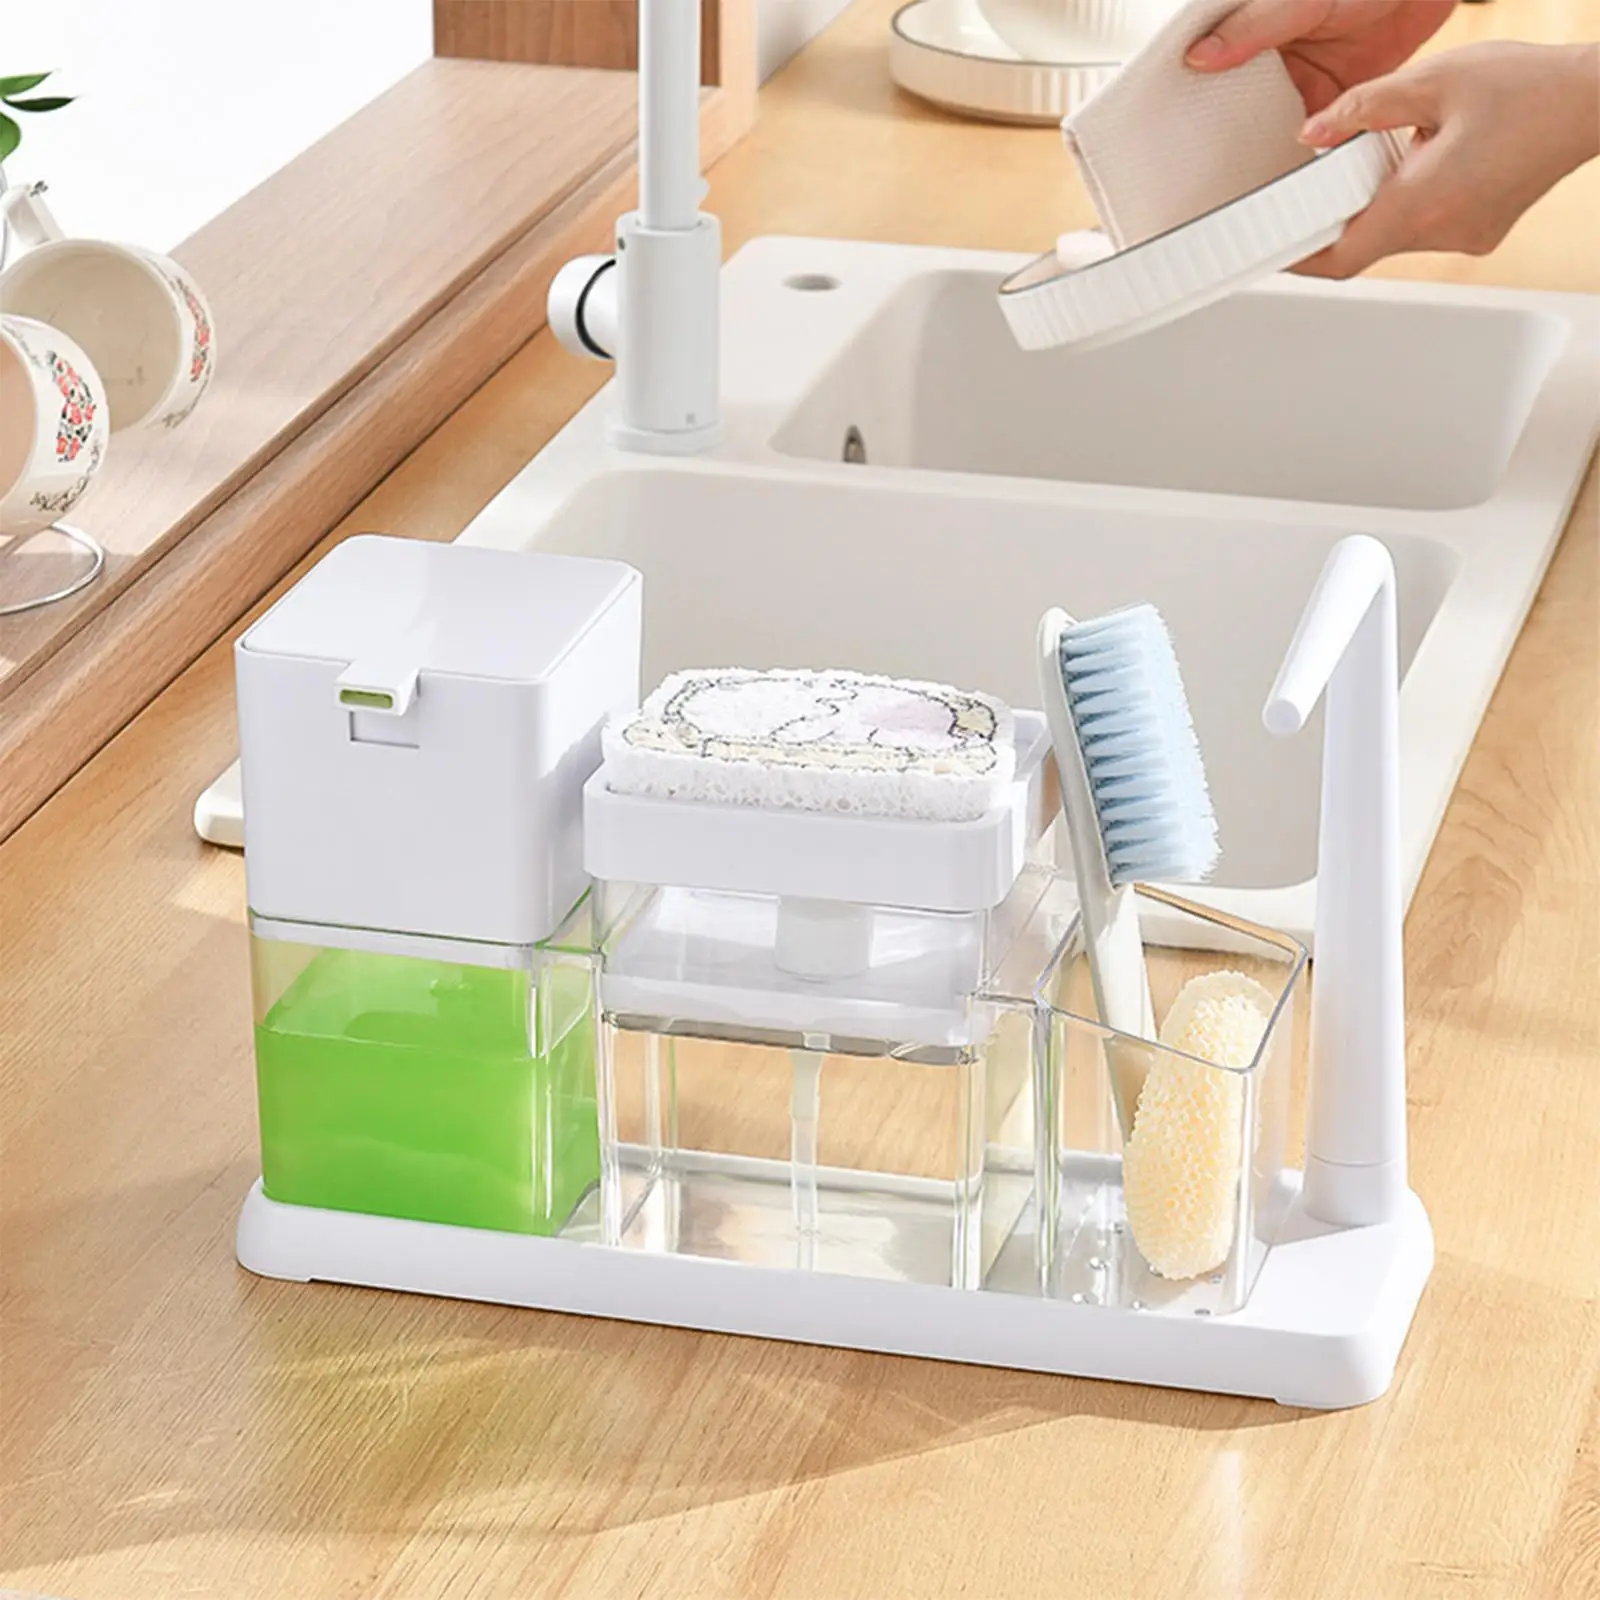 Dish Soap Dispenser Kitchen Gadgets Large Capacity Single Hand Bathroom Draining Tray with Sponge Holder Soap Pump Dispenser